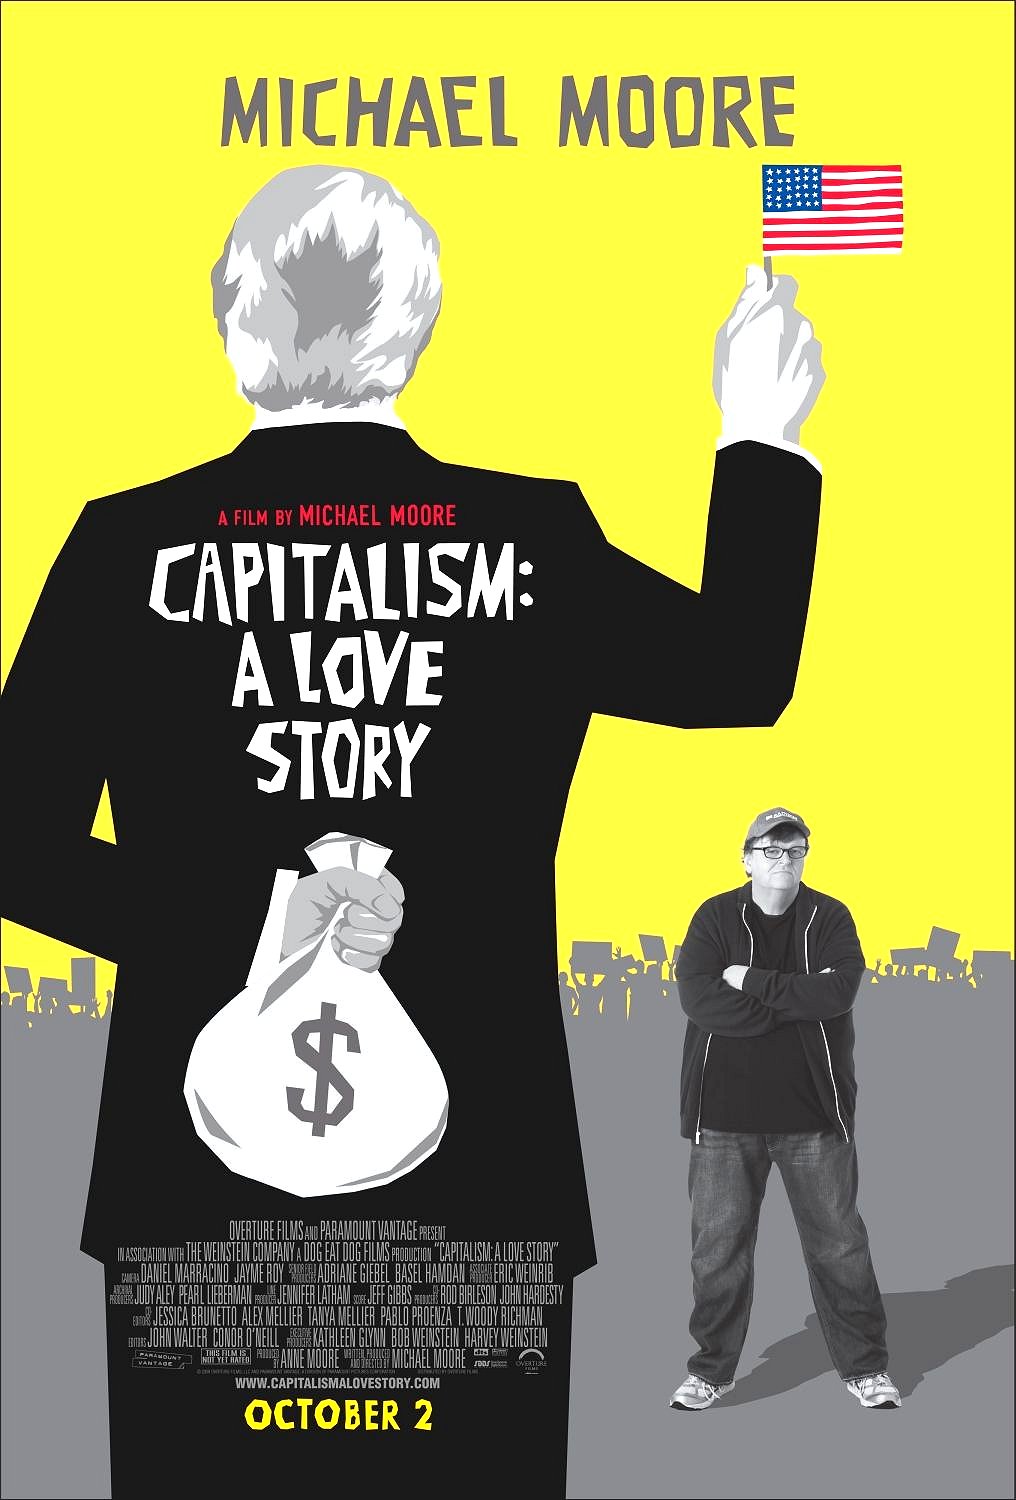 Capitalism: A Love Story Google image from http://4.bp.blogspot.com/_6fY6t5LlXMQ/TIUjsnTGEPI/AAAAAAAAAKI/_PKWlG8mmI4/s1600/capitalism_a_love_story_xlg.jpg